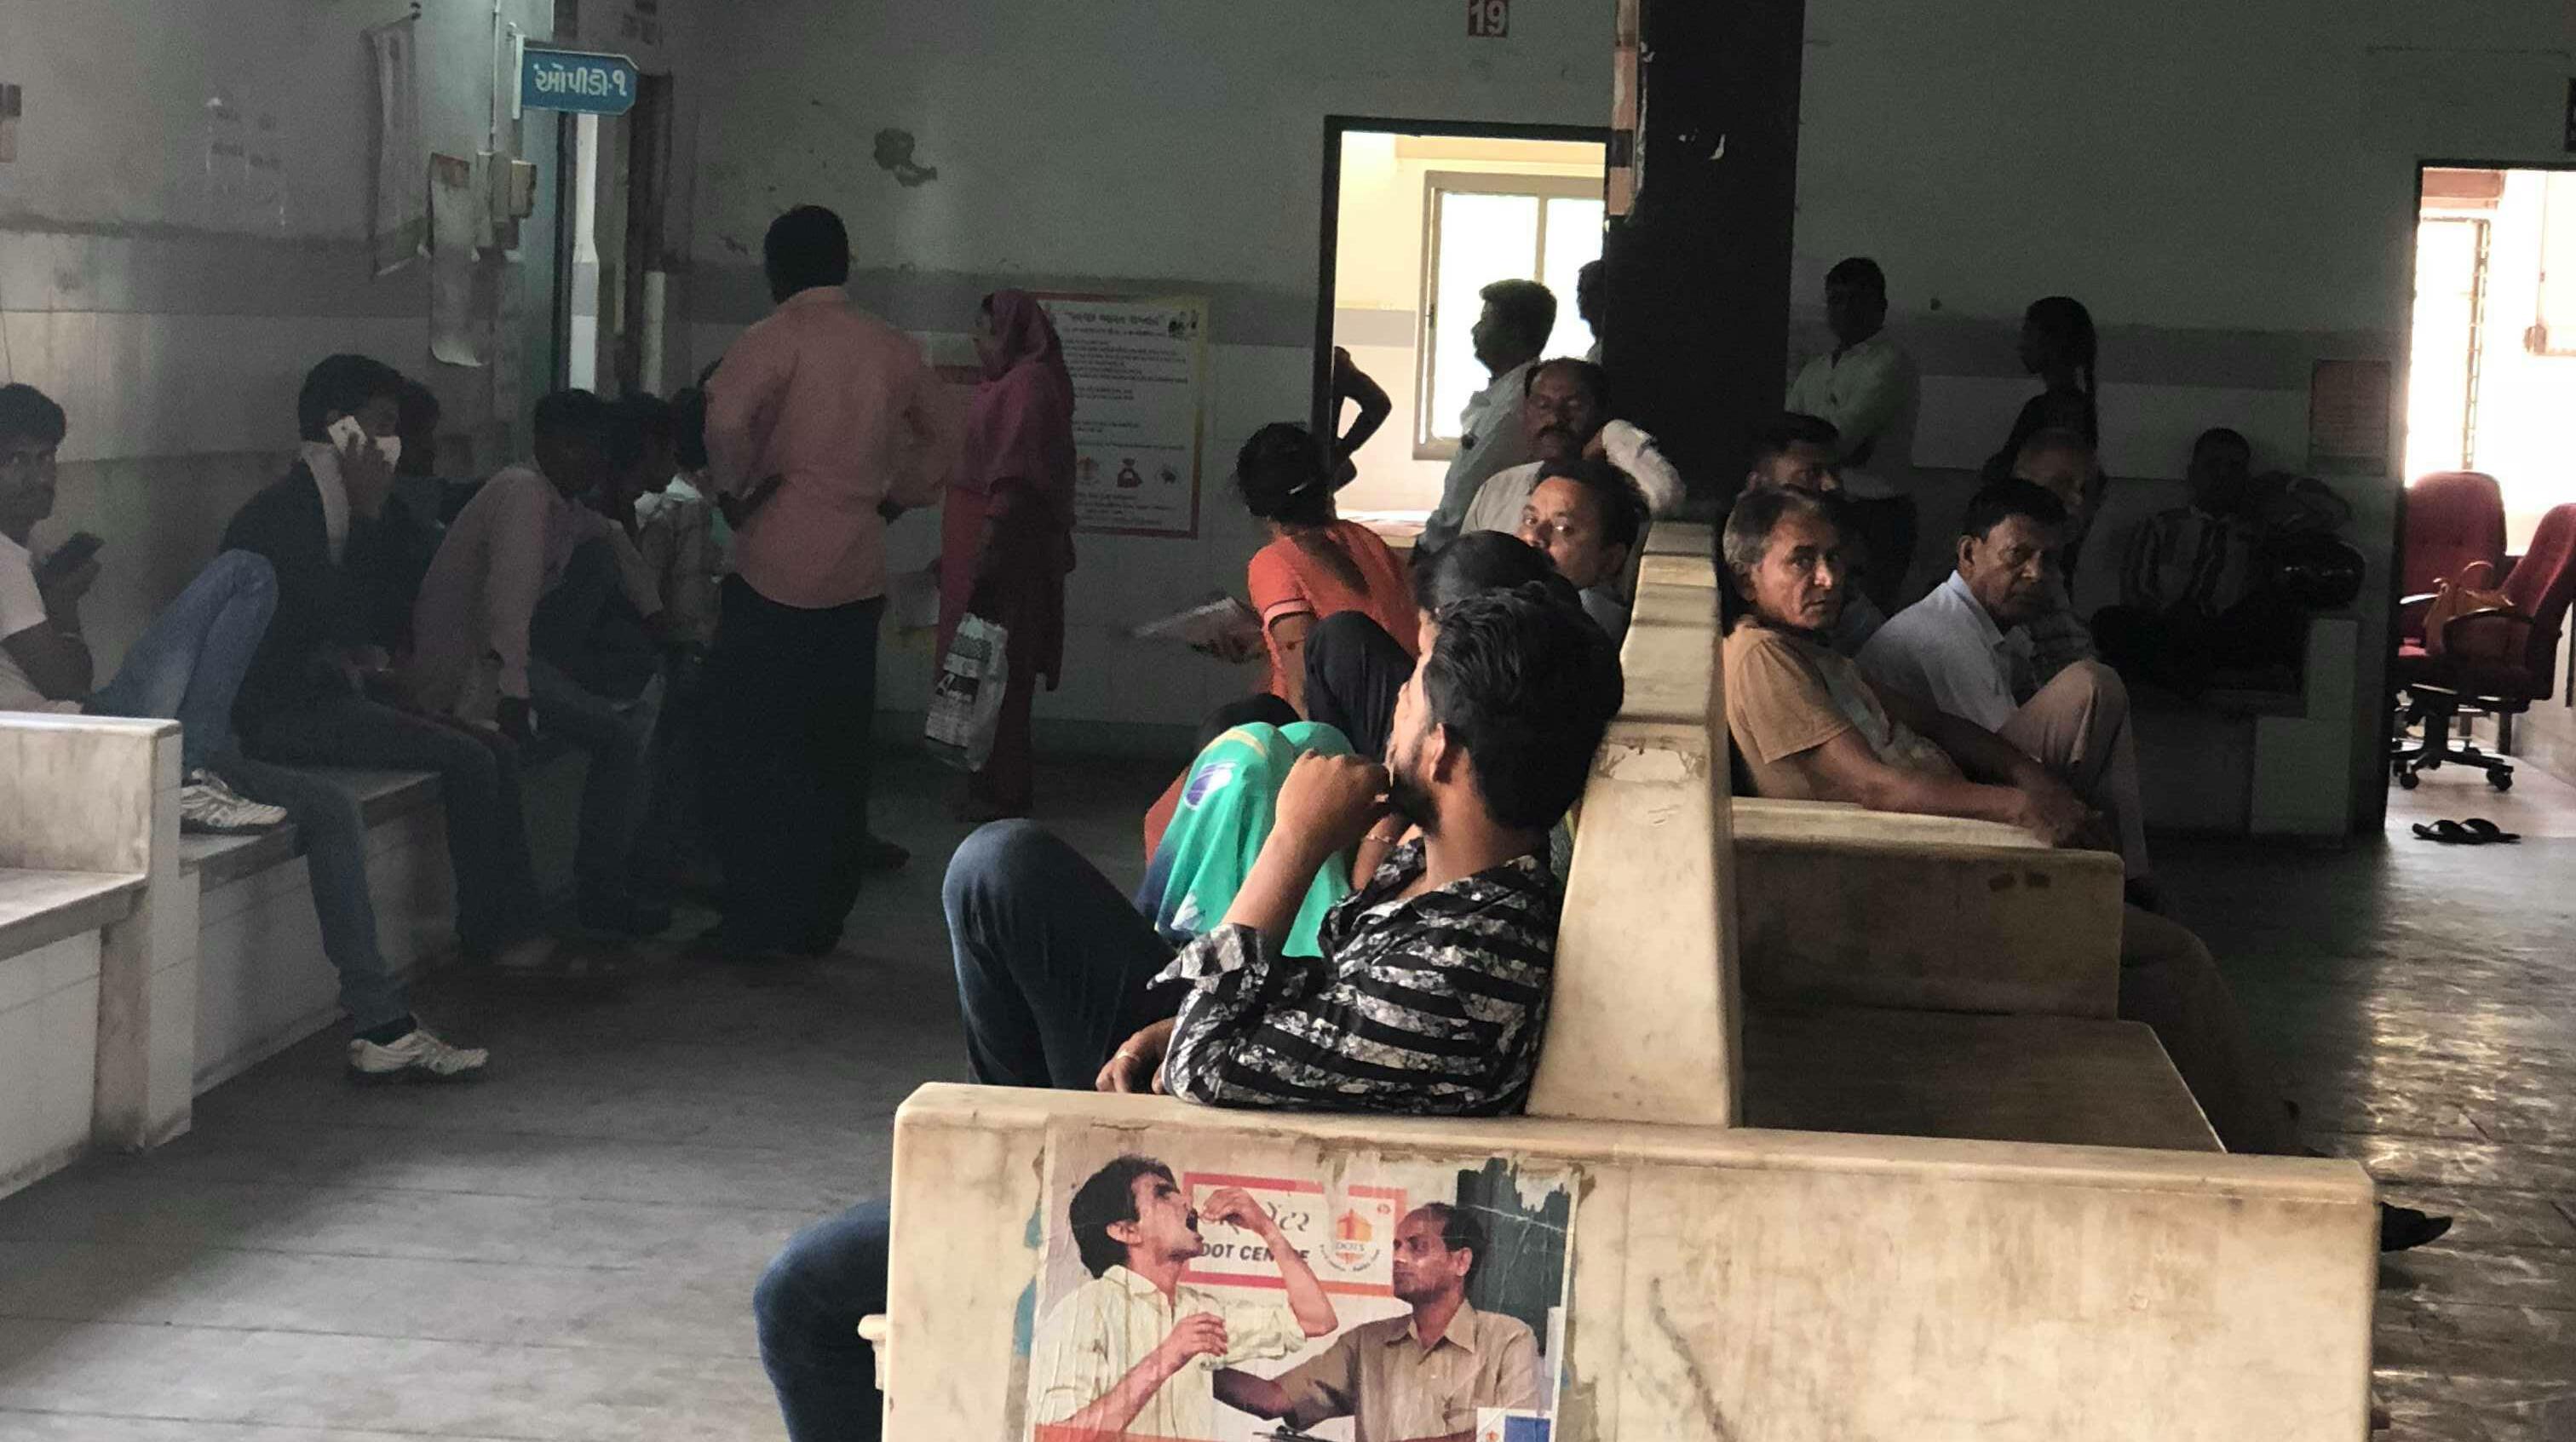 TB waiting room of a hospital in Ahmedabad, India credit Laura Rosu